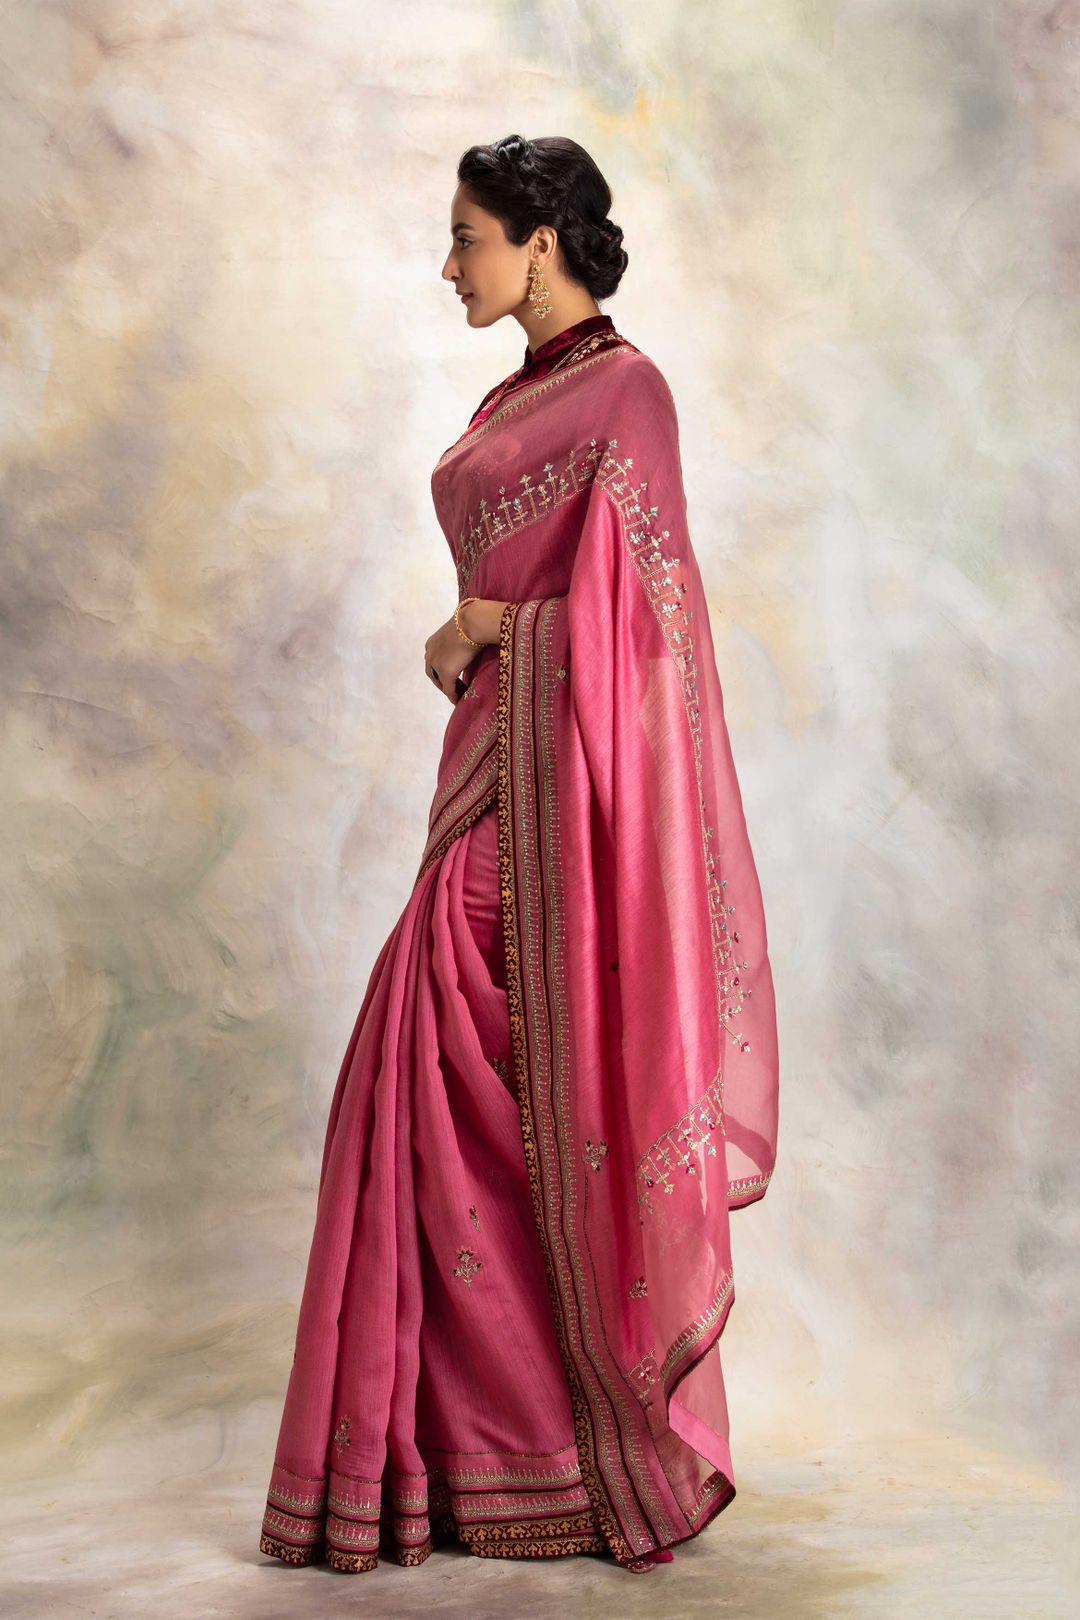 Popular saree brands to shop on 2019. | Handloom saree, Saree, Elegant saree